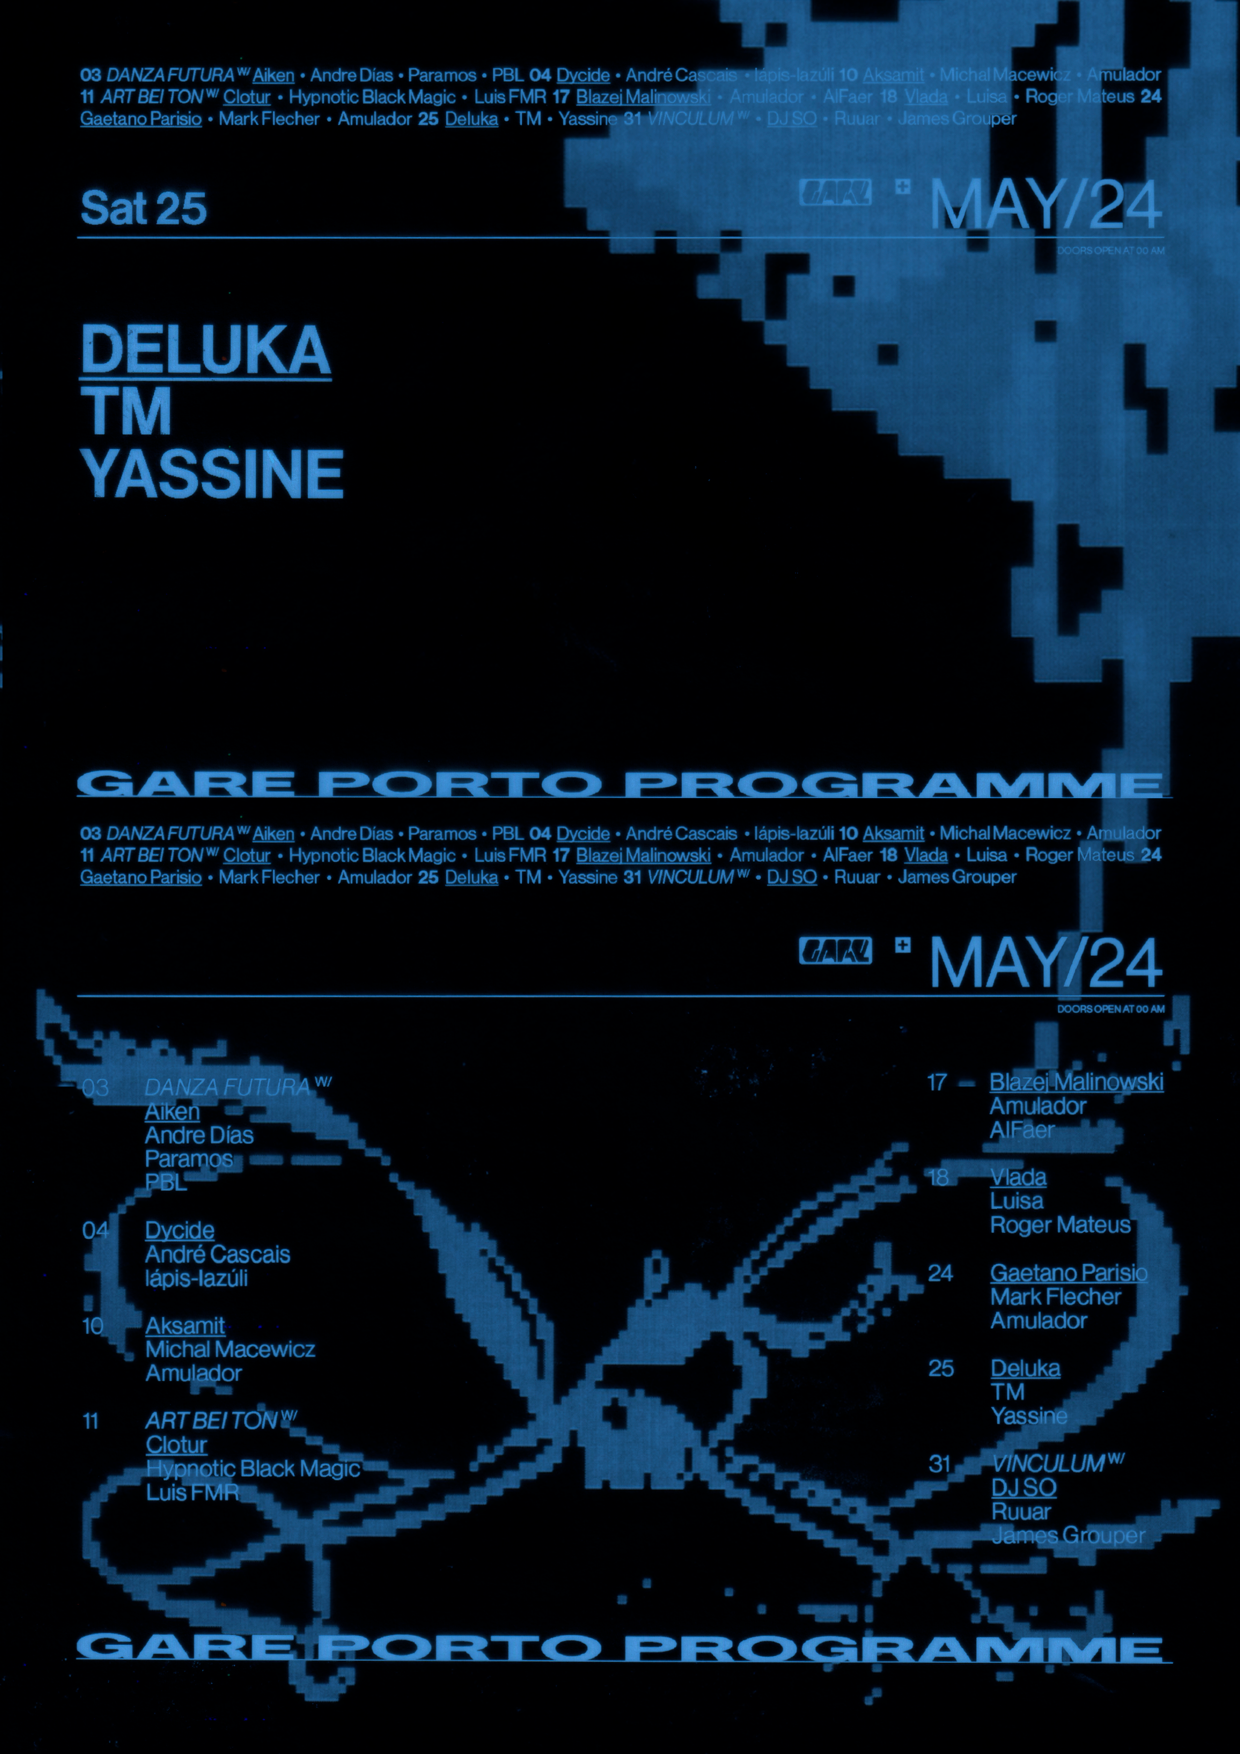 Deluka + TM + Yassine - フライヤー表